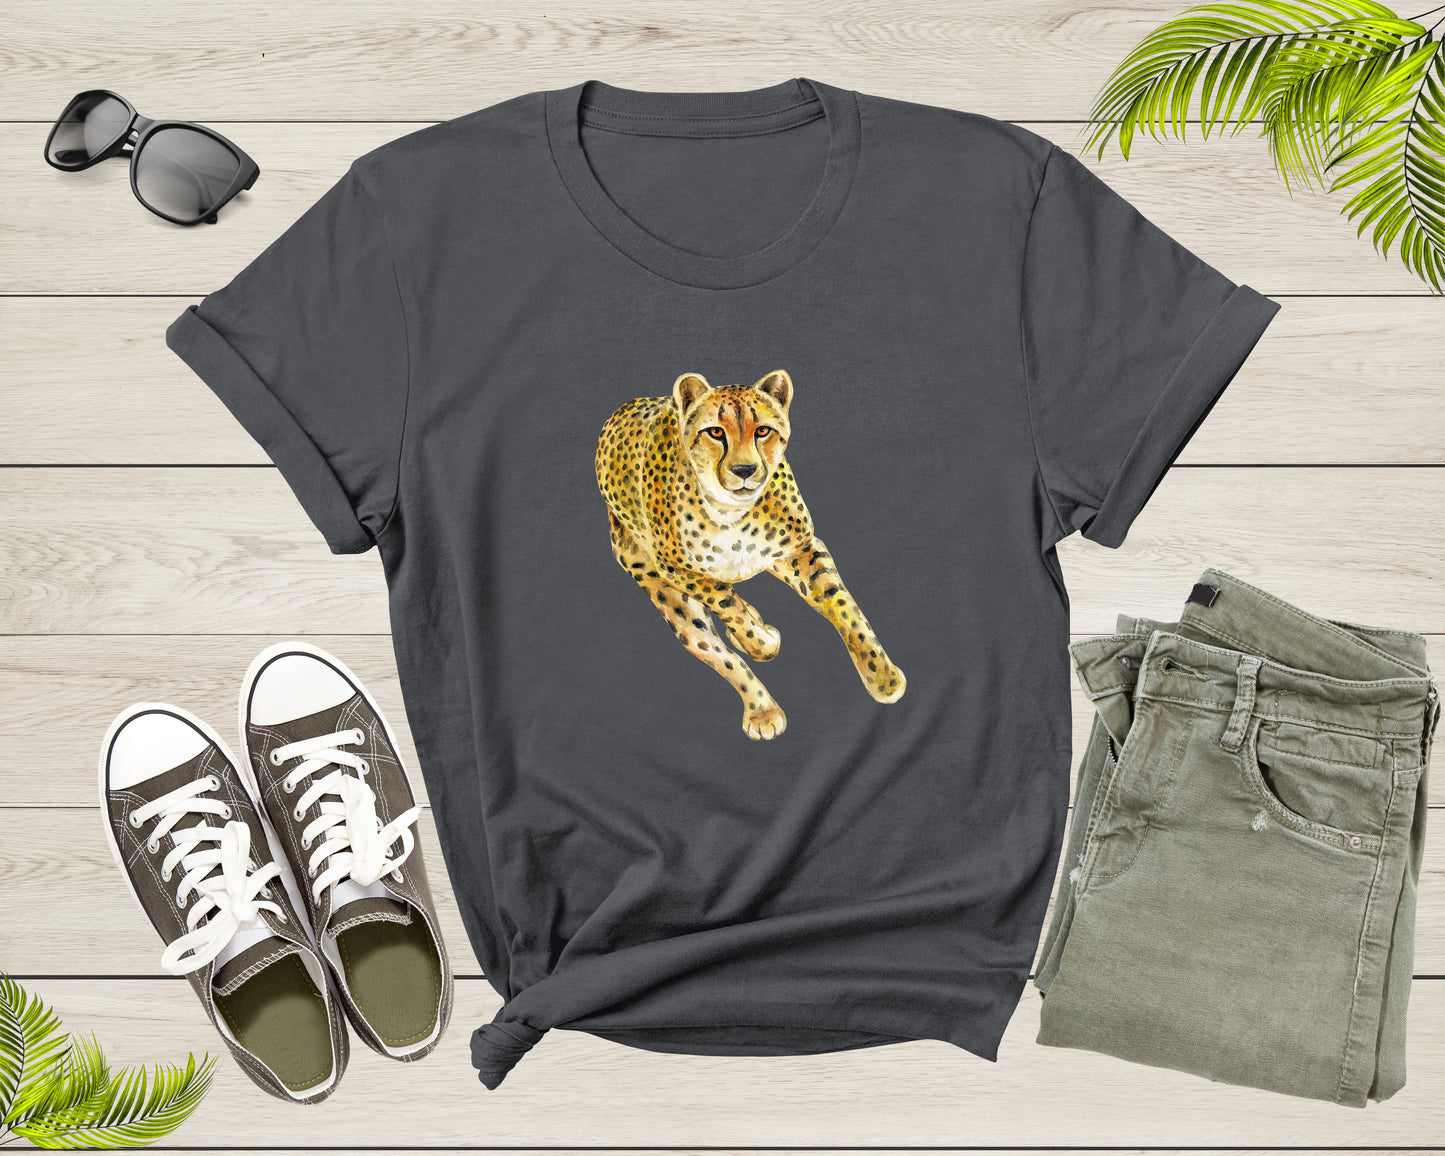 Speedy Running Cheetah Wild Cat Animal Hunting for Prey T-Shirt Cool Cheetah Cat Lover Gift T Shirt for Men Women Kids Boys Girls Tshirt